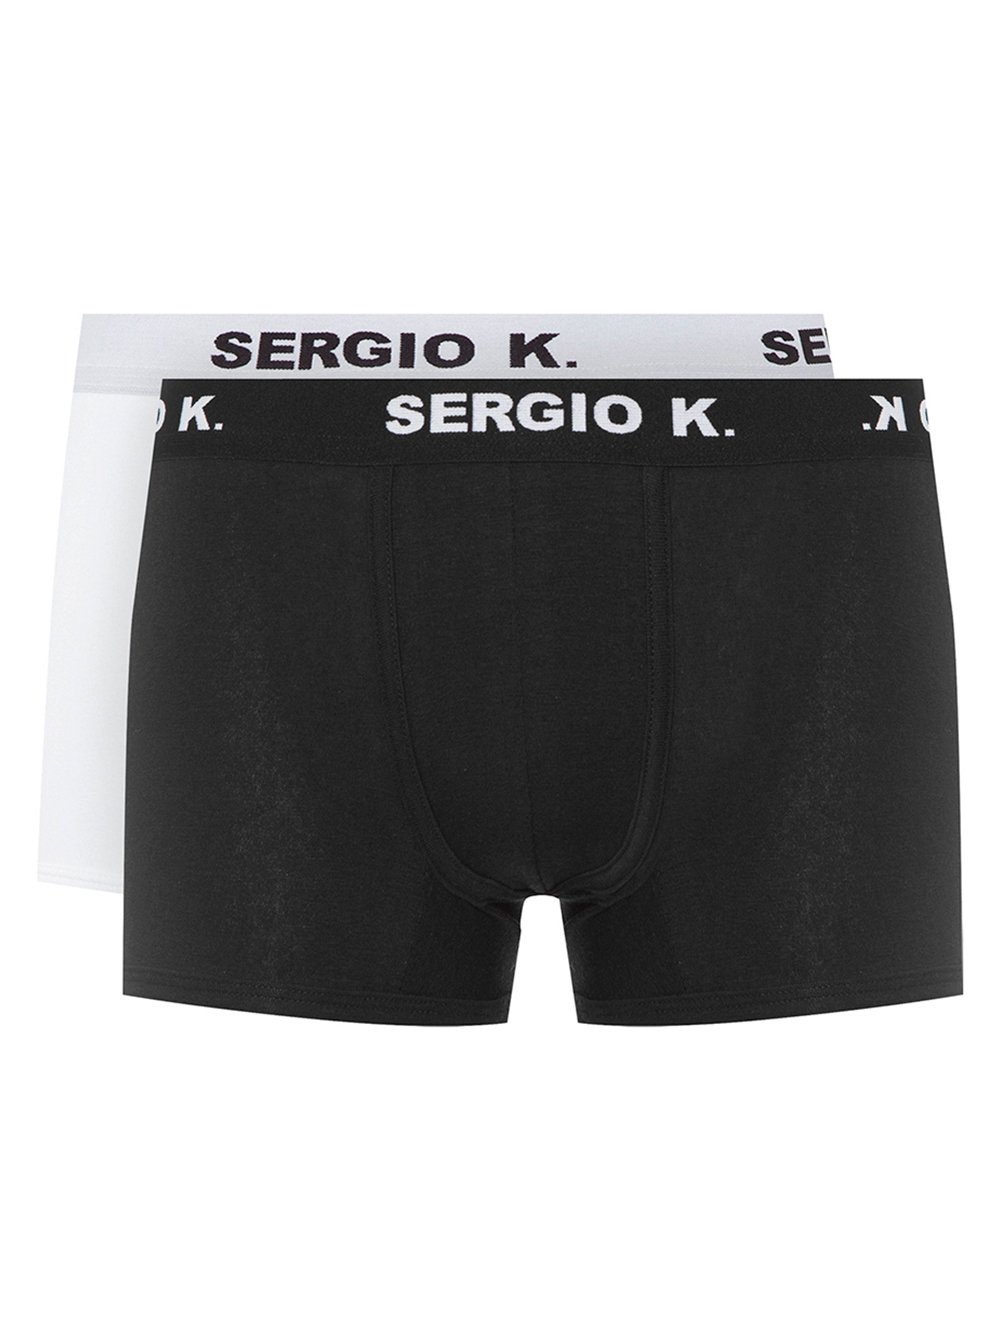 Cueca Sergio K Boxer Branca/Preta Pack 2UN